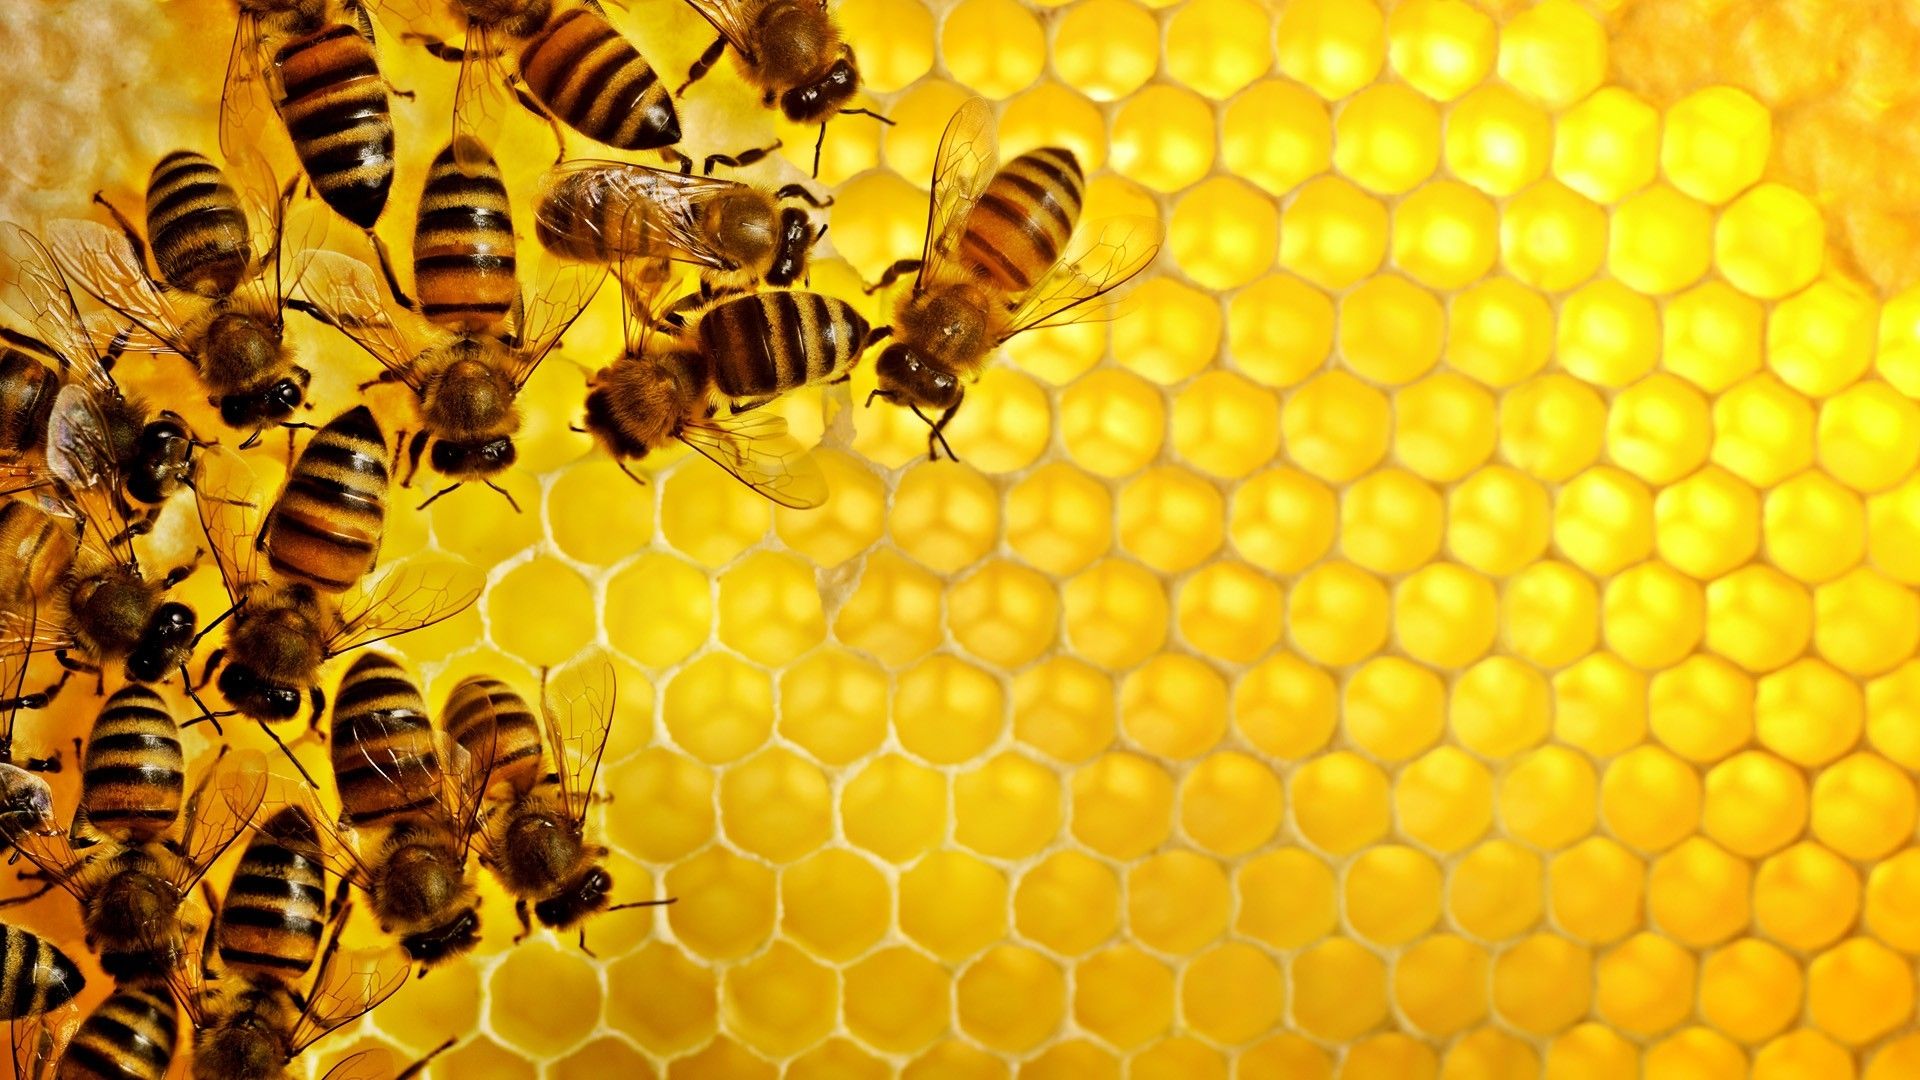 sweden honey bees 1920x1080 wallpaper High Quality Wallpaper, High Definition Wallpaper